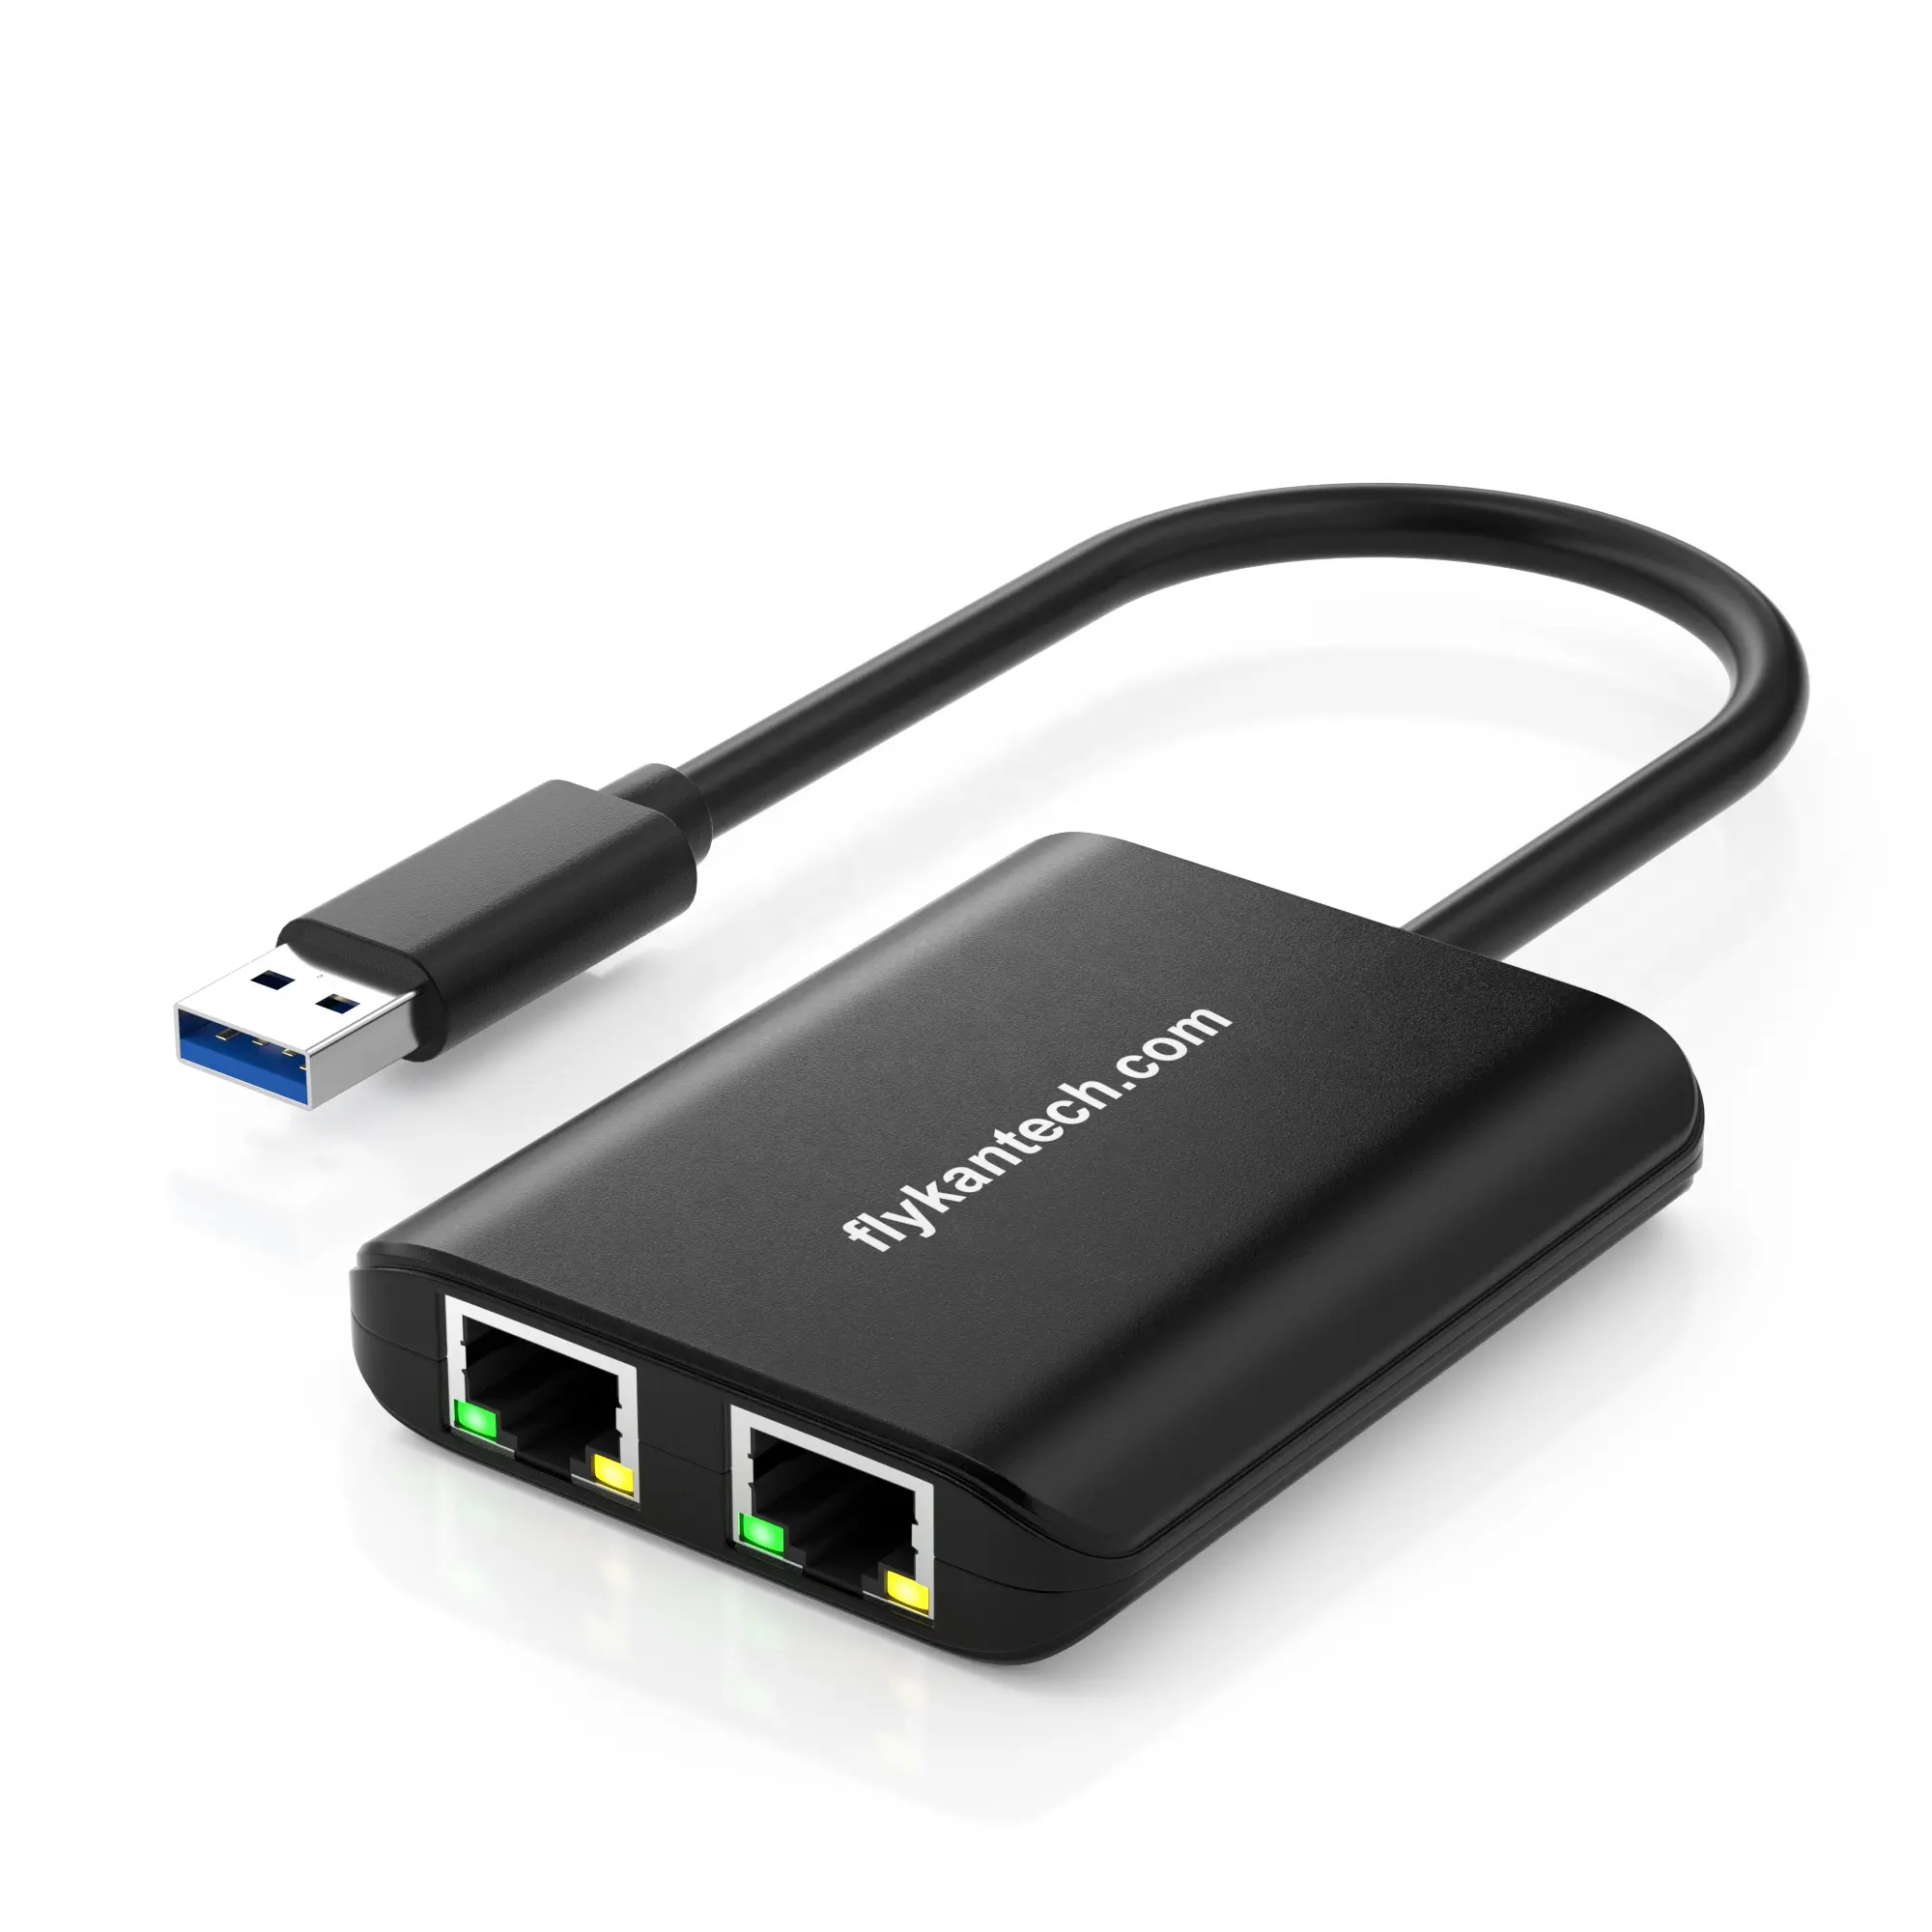 DriverGenius CU200 | USB 3.0 to Dual Port Gigabit Ethernet Adapter w/USB Port - 10/100/100 - USB Gigabit LAN Network NIC Adapter